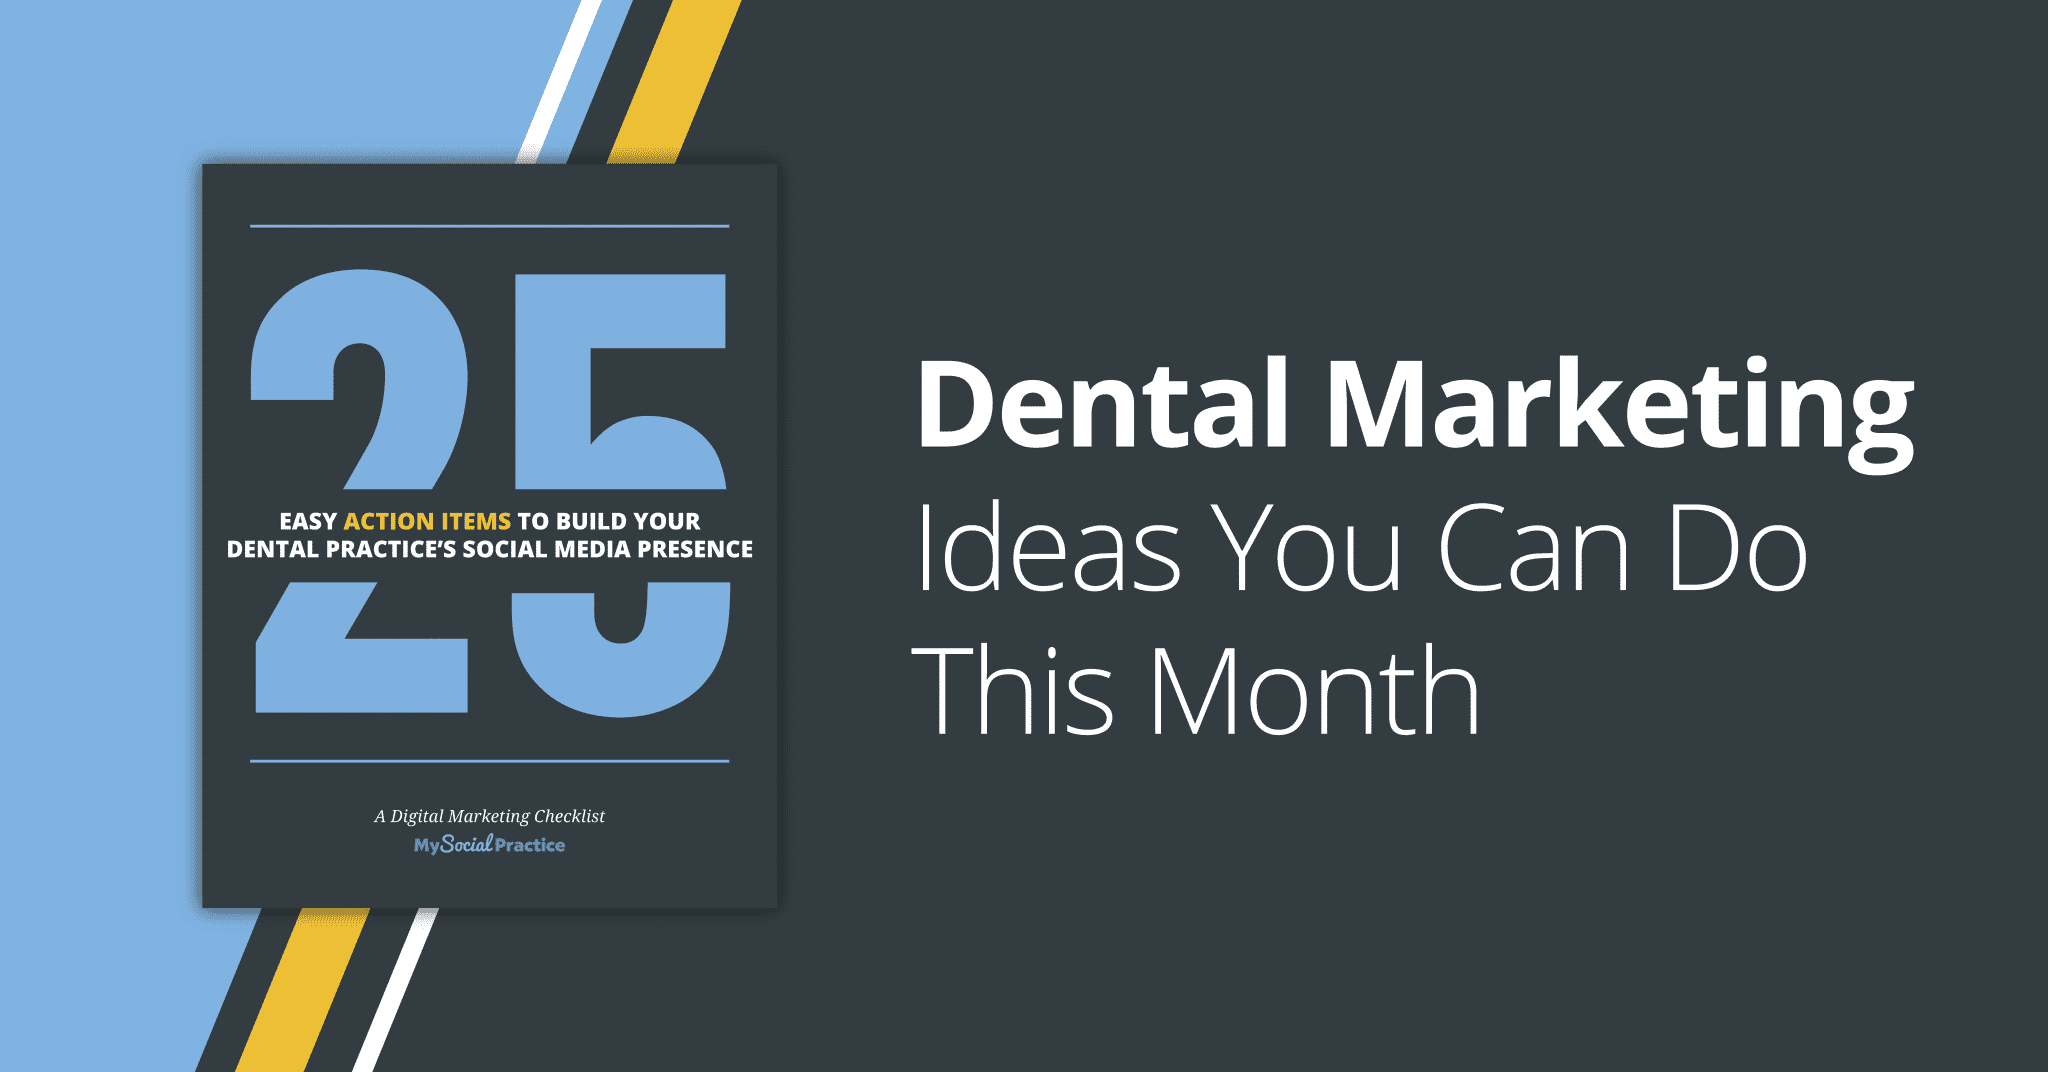 My Social Practice - Social Media Marketing for Dental & Dental Specialty Practices - instagram reels for dental practices